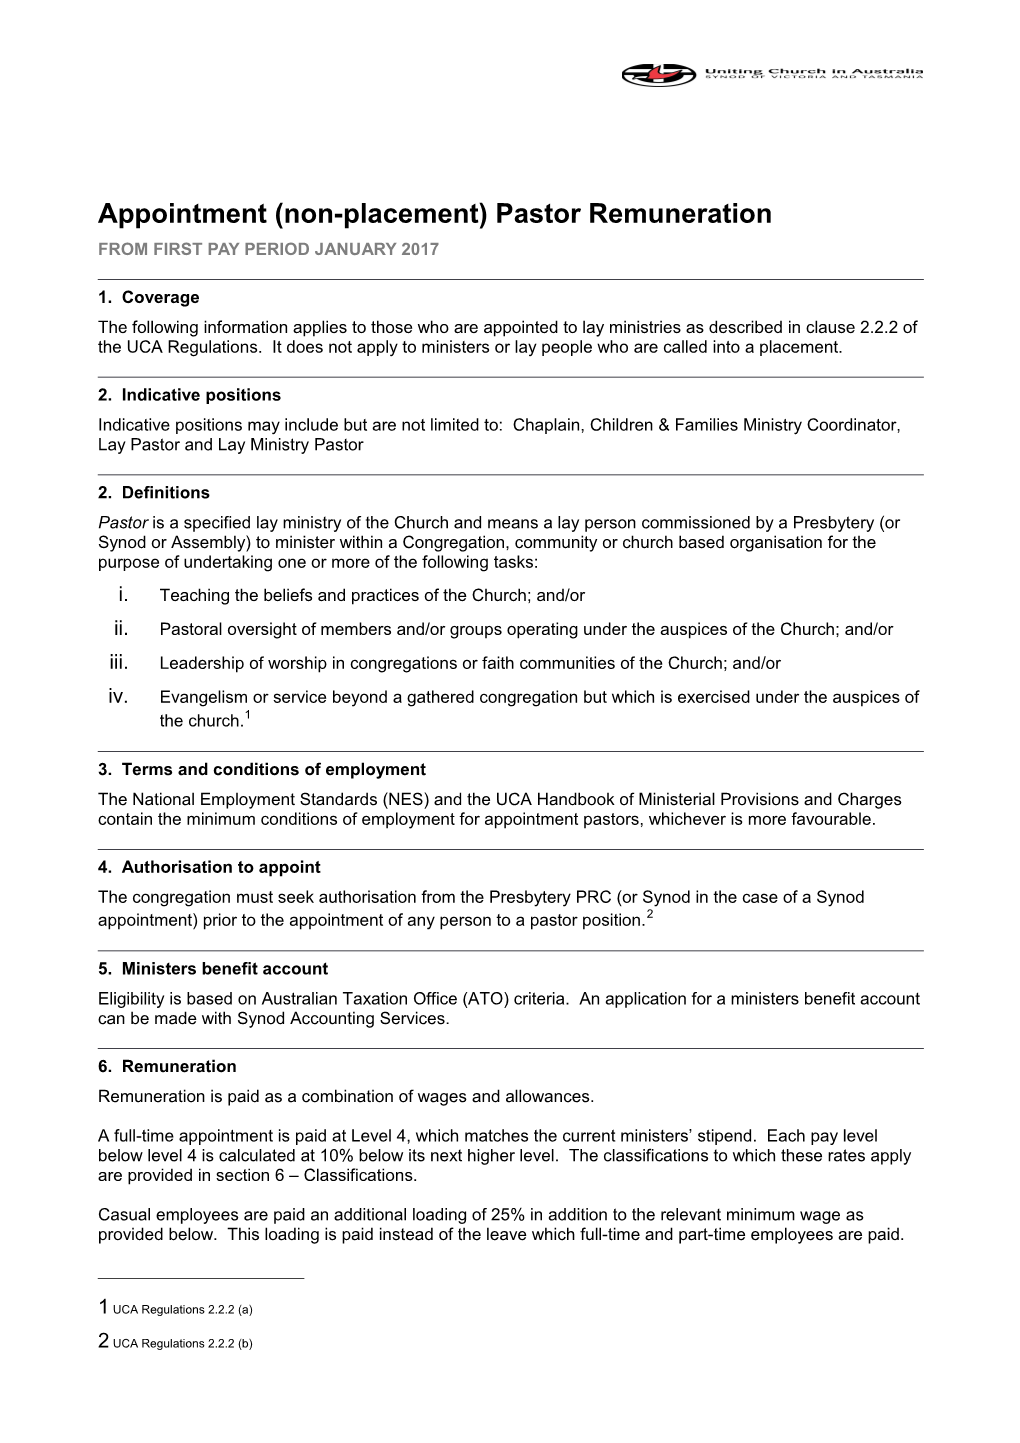 Non-Placement Pastor Remuneration Guidelines 2017